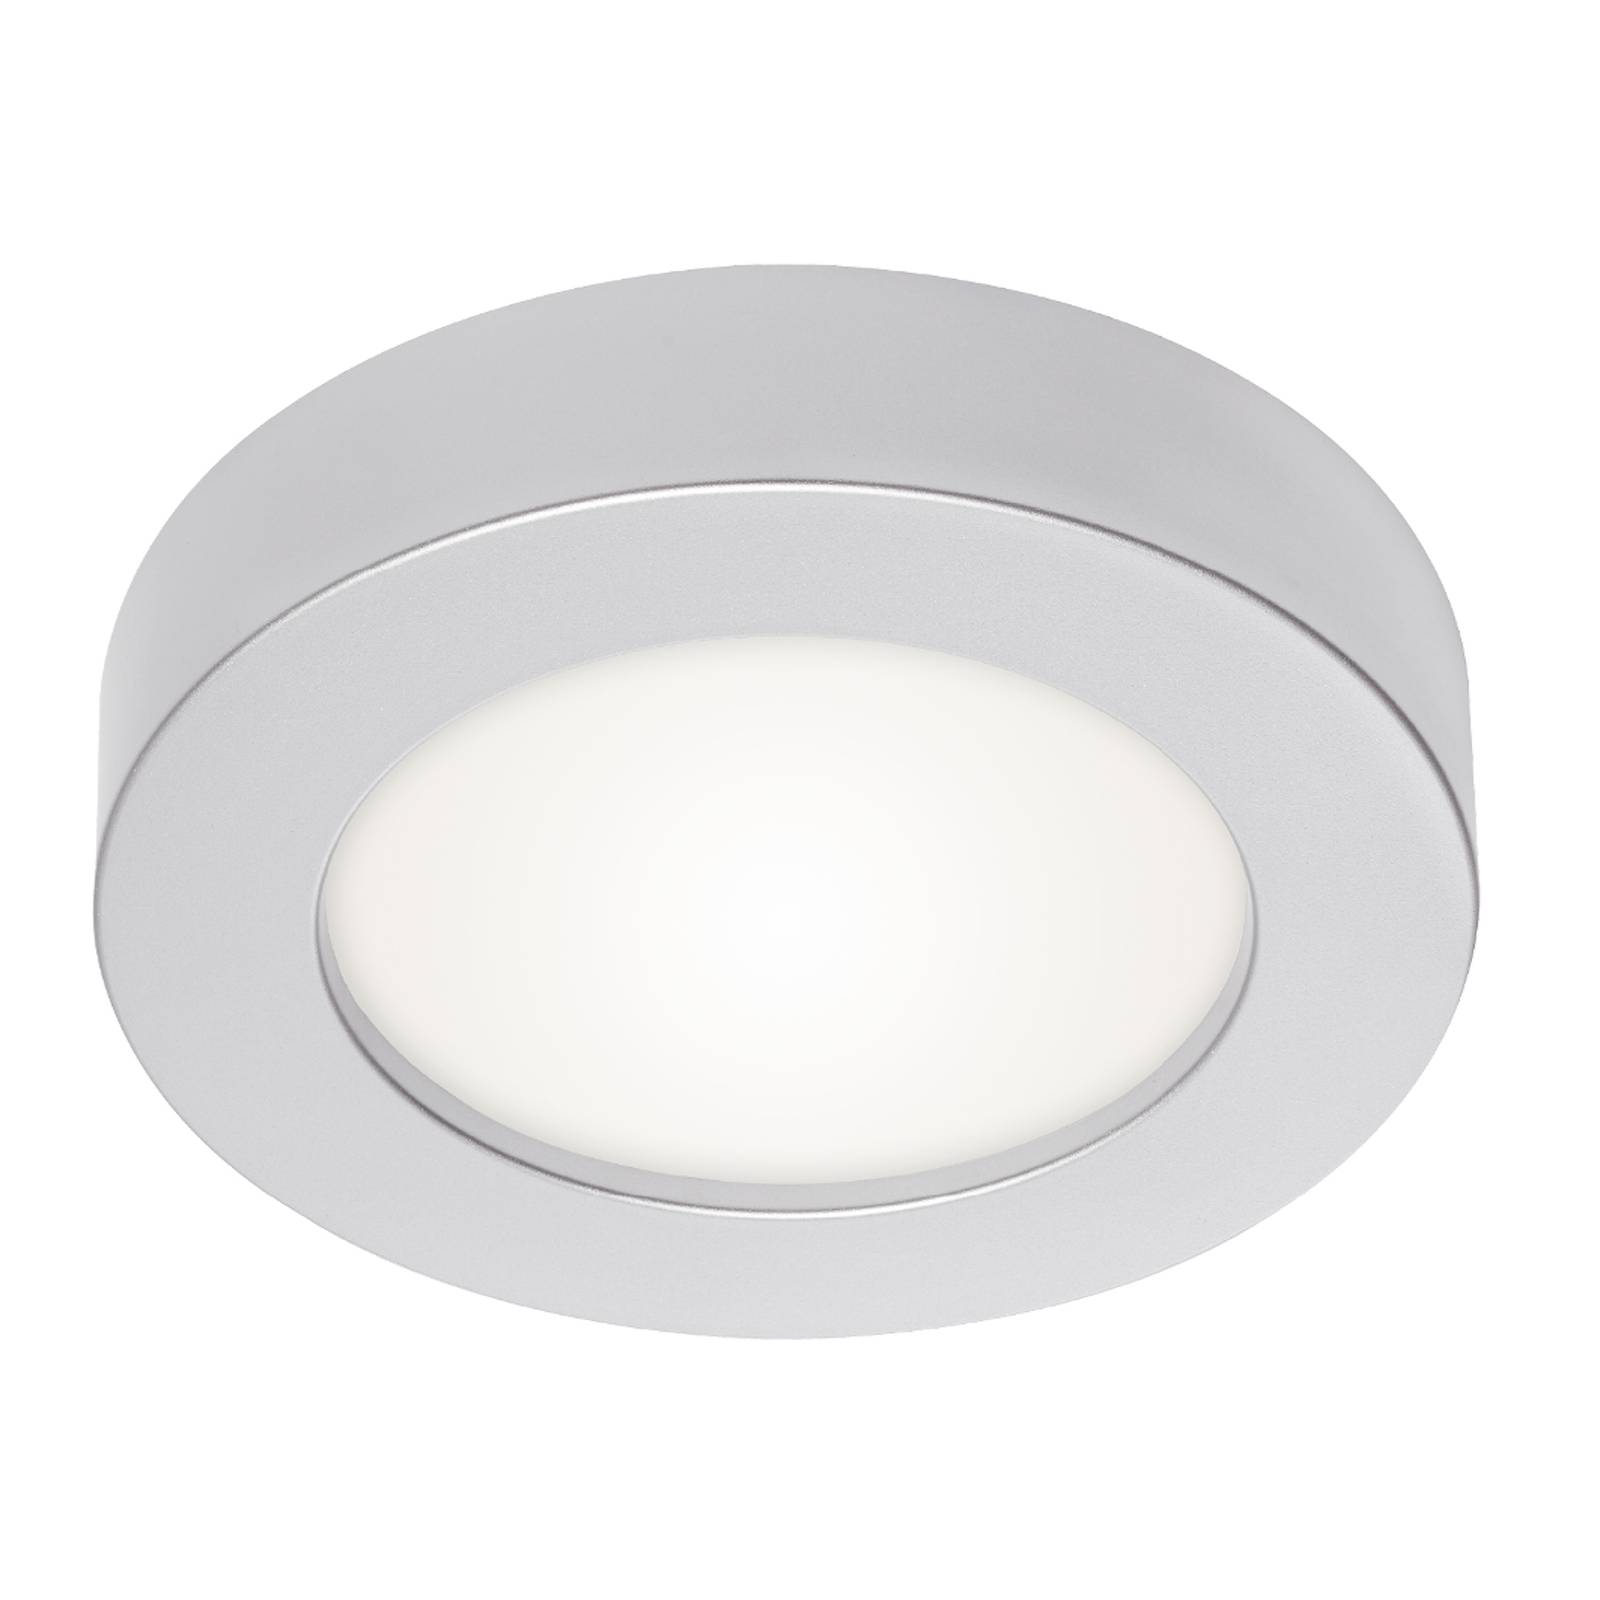 Prios Edwina LED ceiling light, silver, 22.6 cm